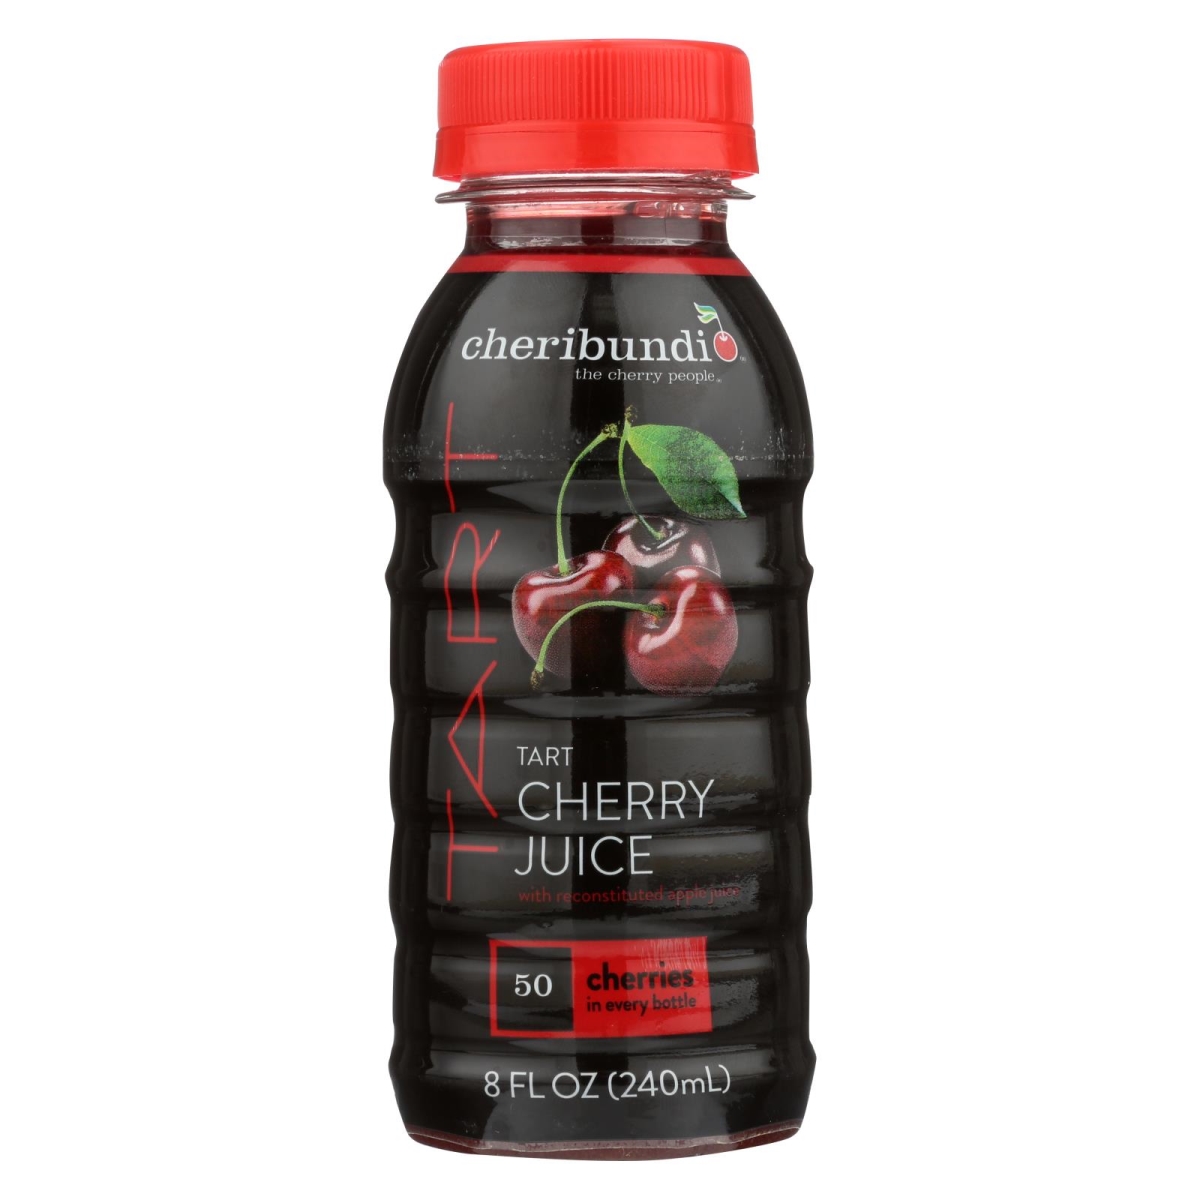 Picture of Cheribundi HG0610451 8 fl oz Tart Cherry Juice with Reconstituted Apple Juice - Case of 12